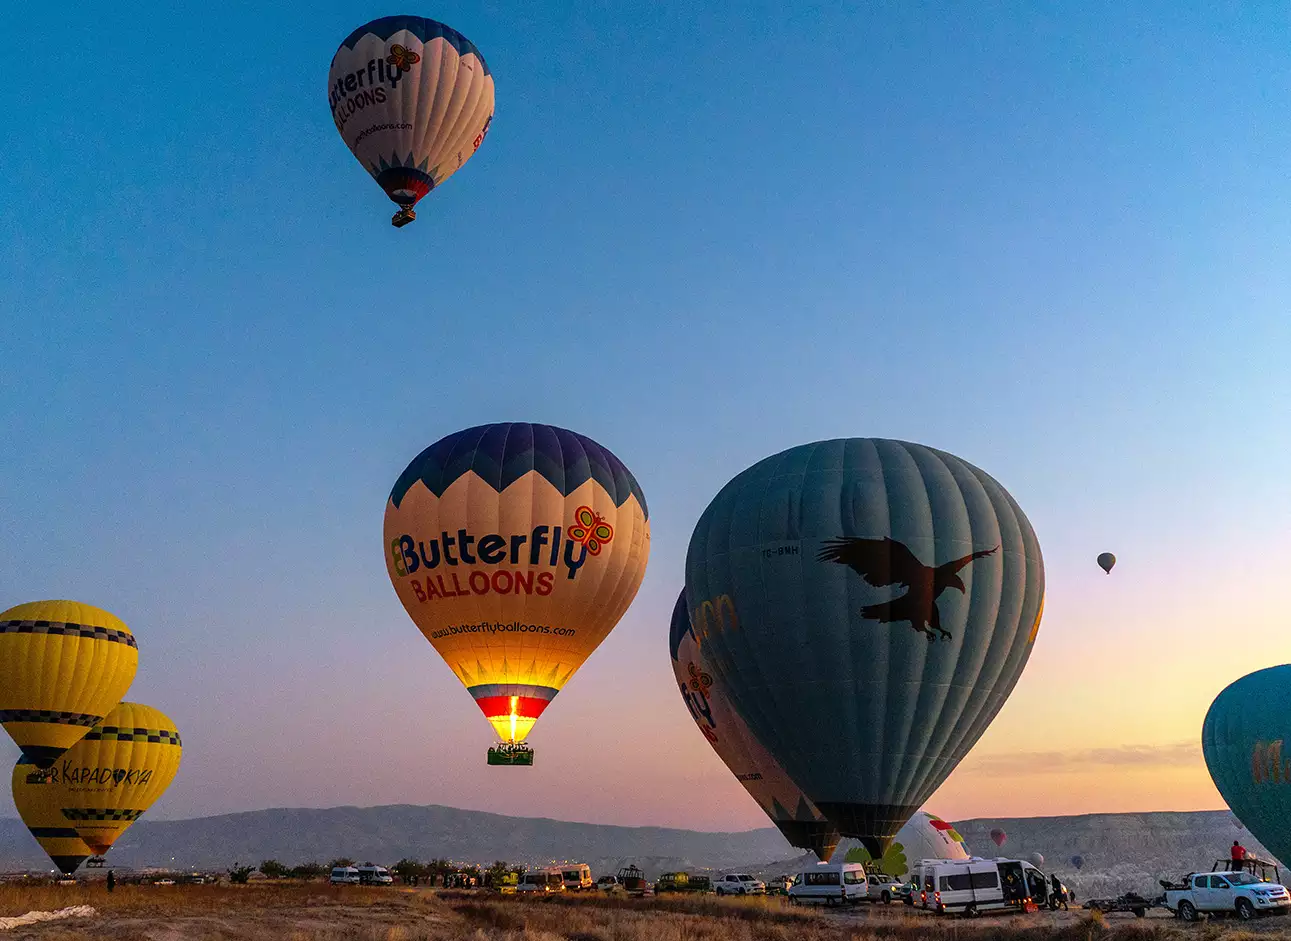 Hot Air Ballooning - Experience breathtaking views on exhilarating hot air balloon rides